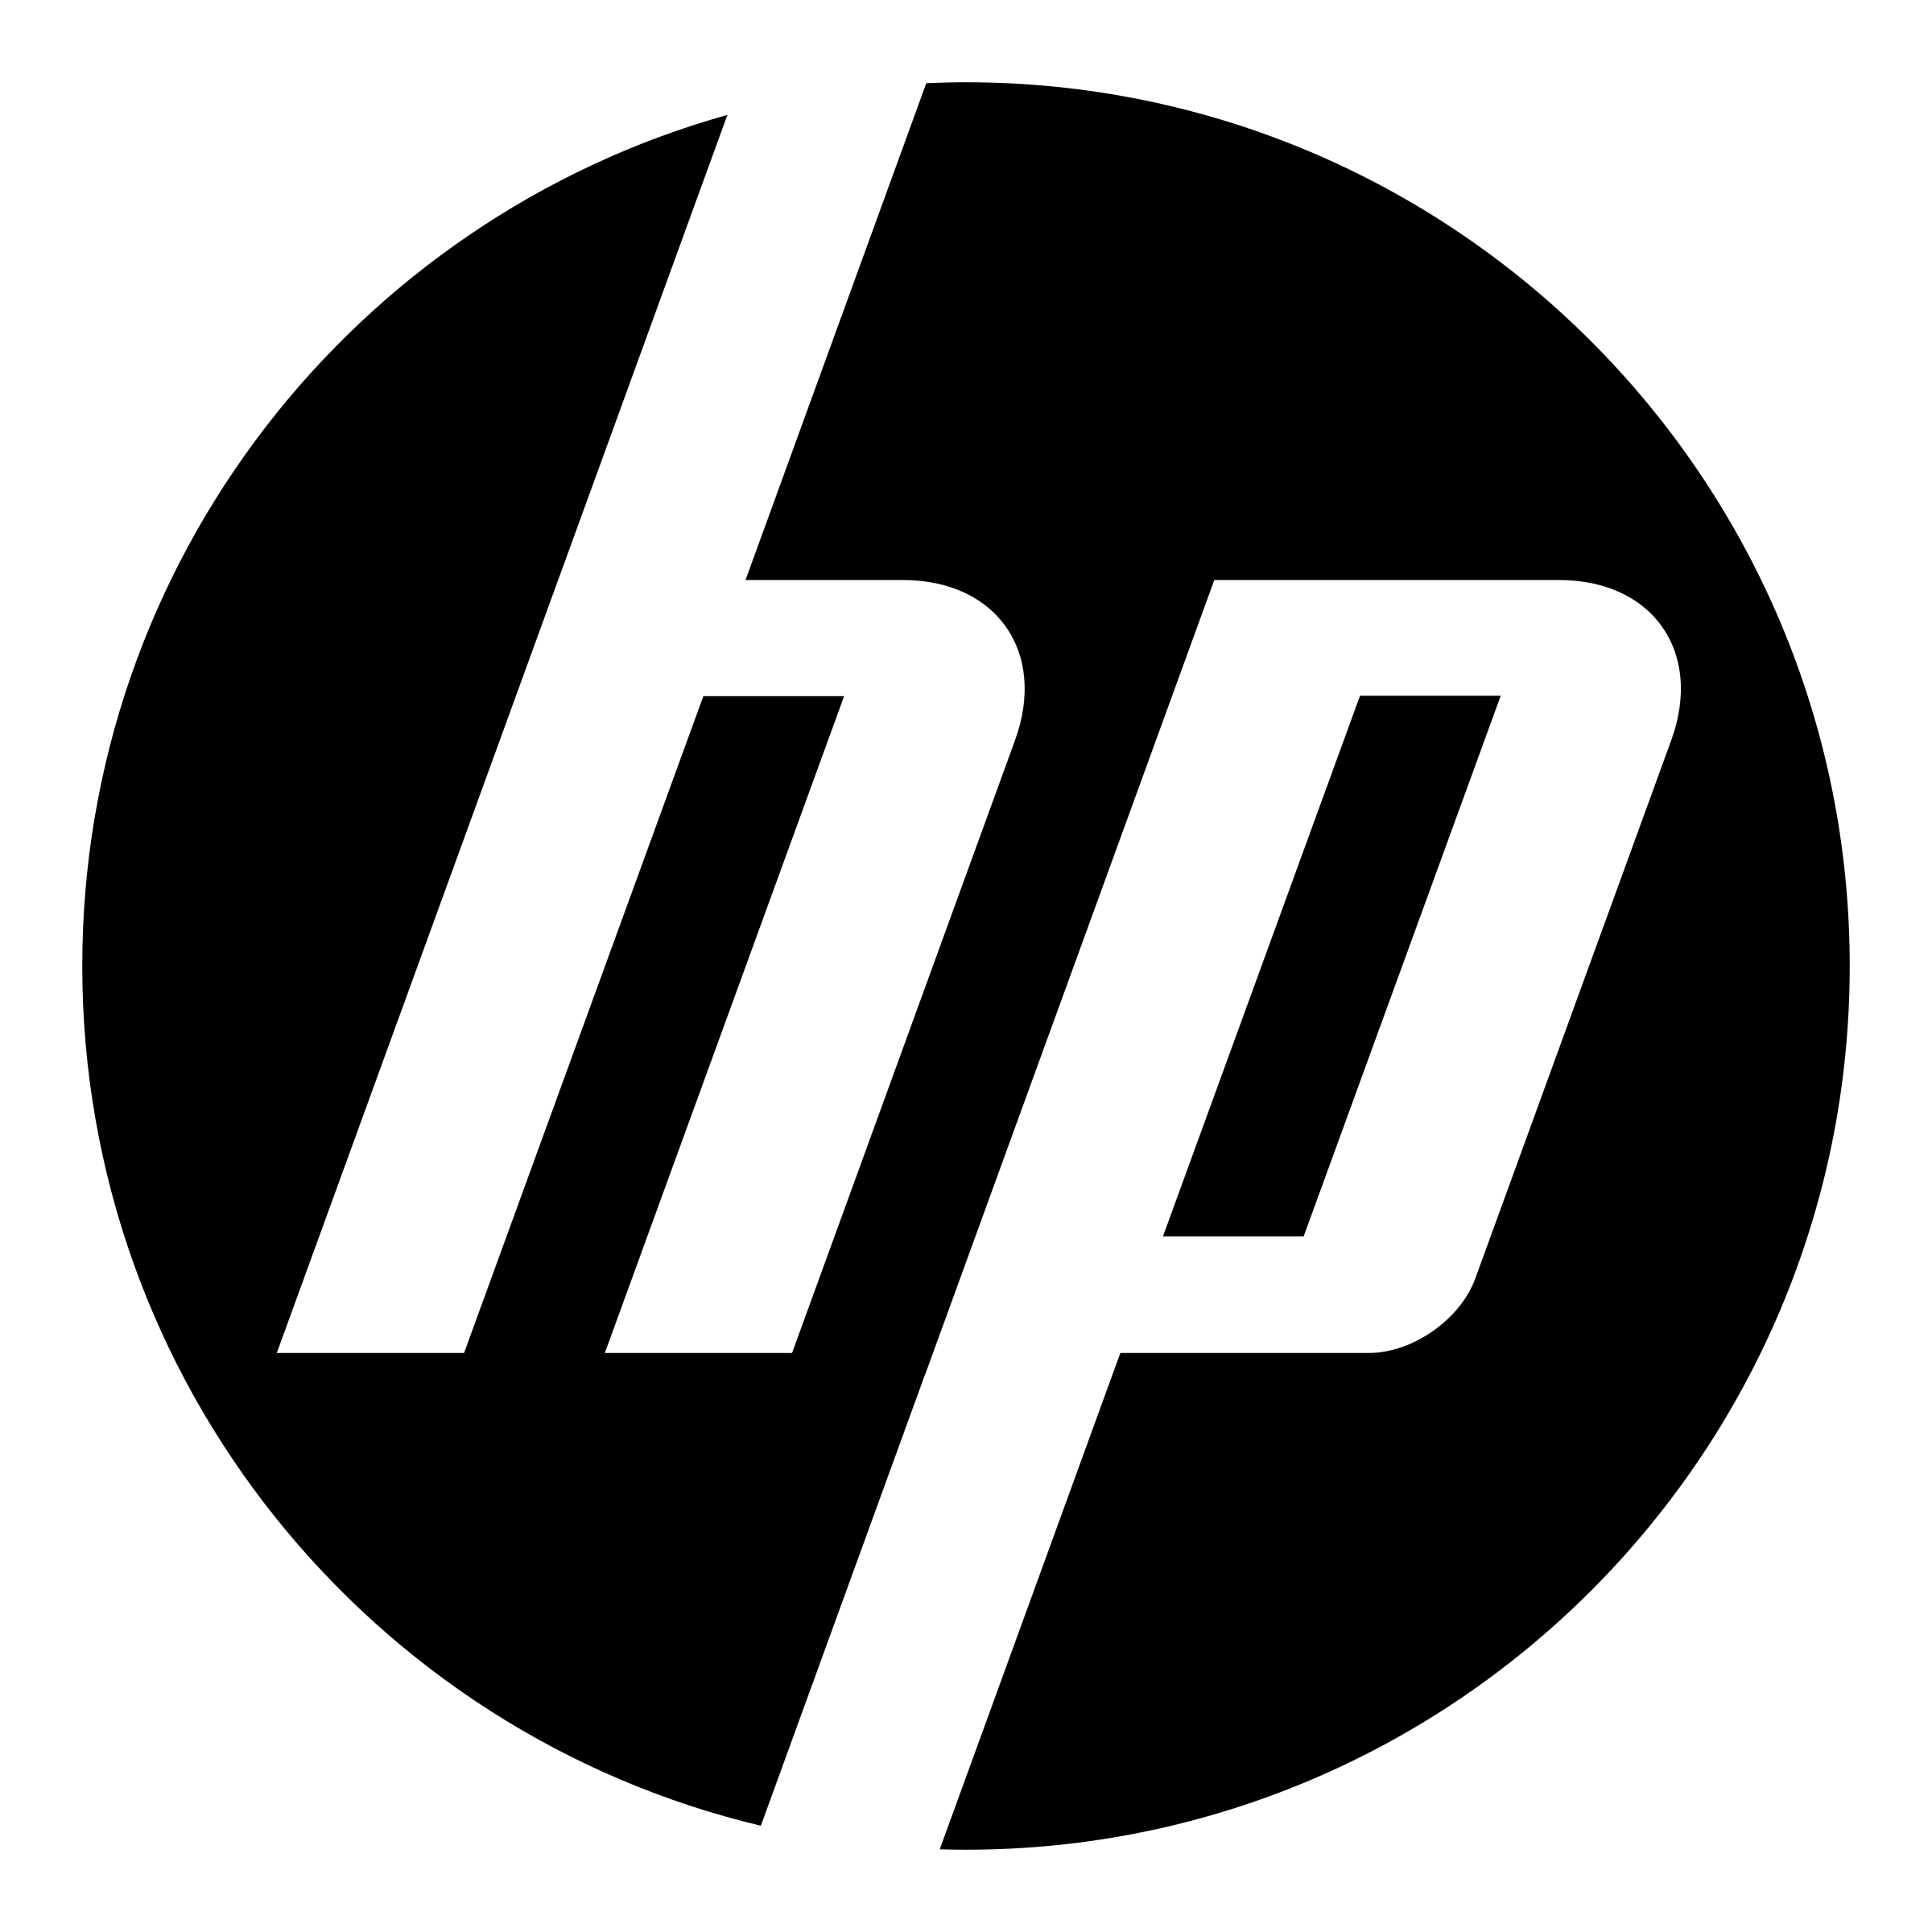 hewlett packard logo black and white